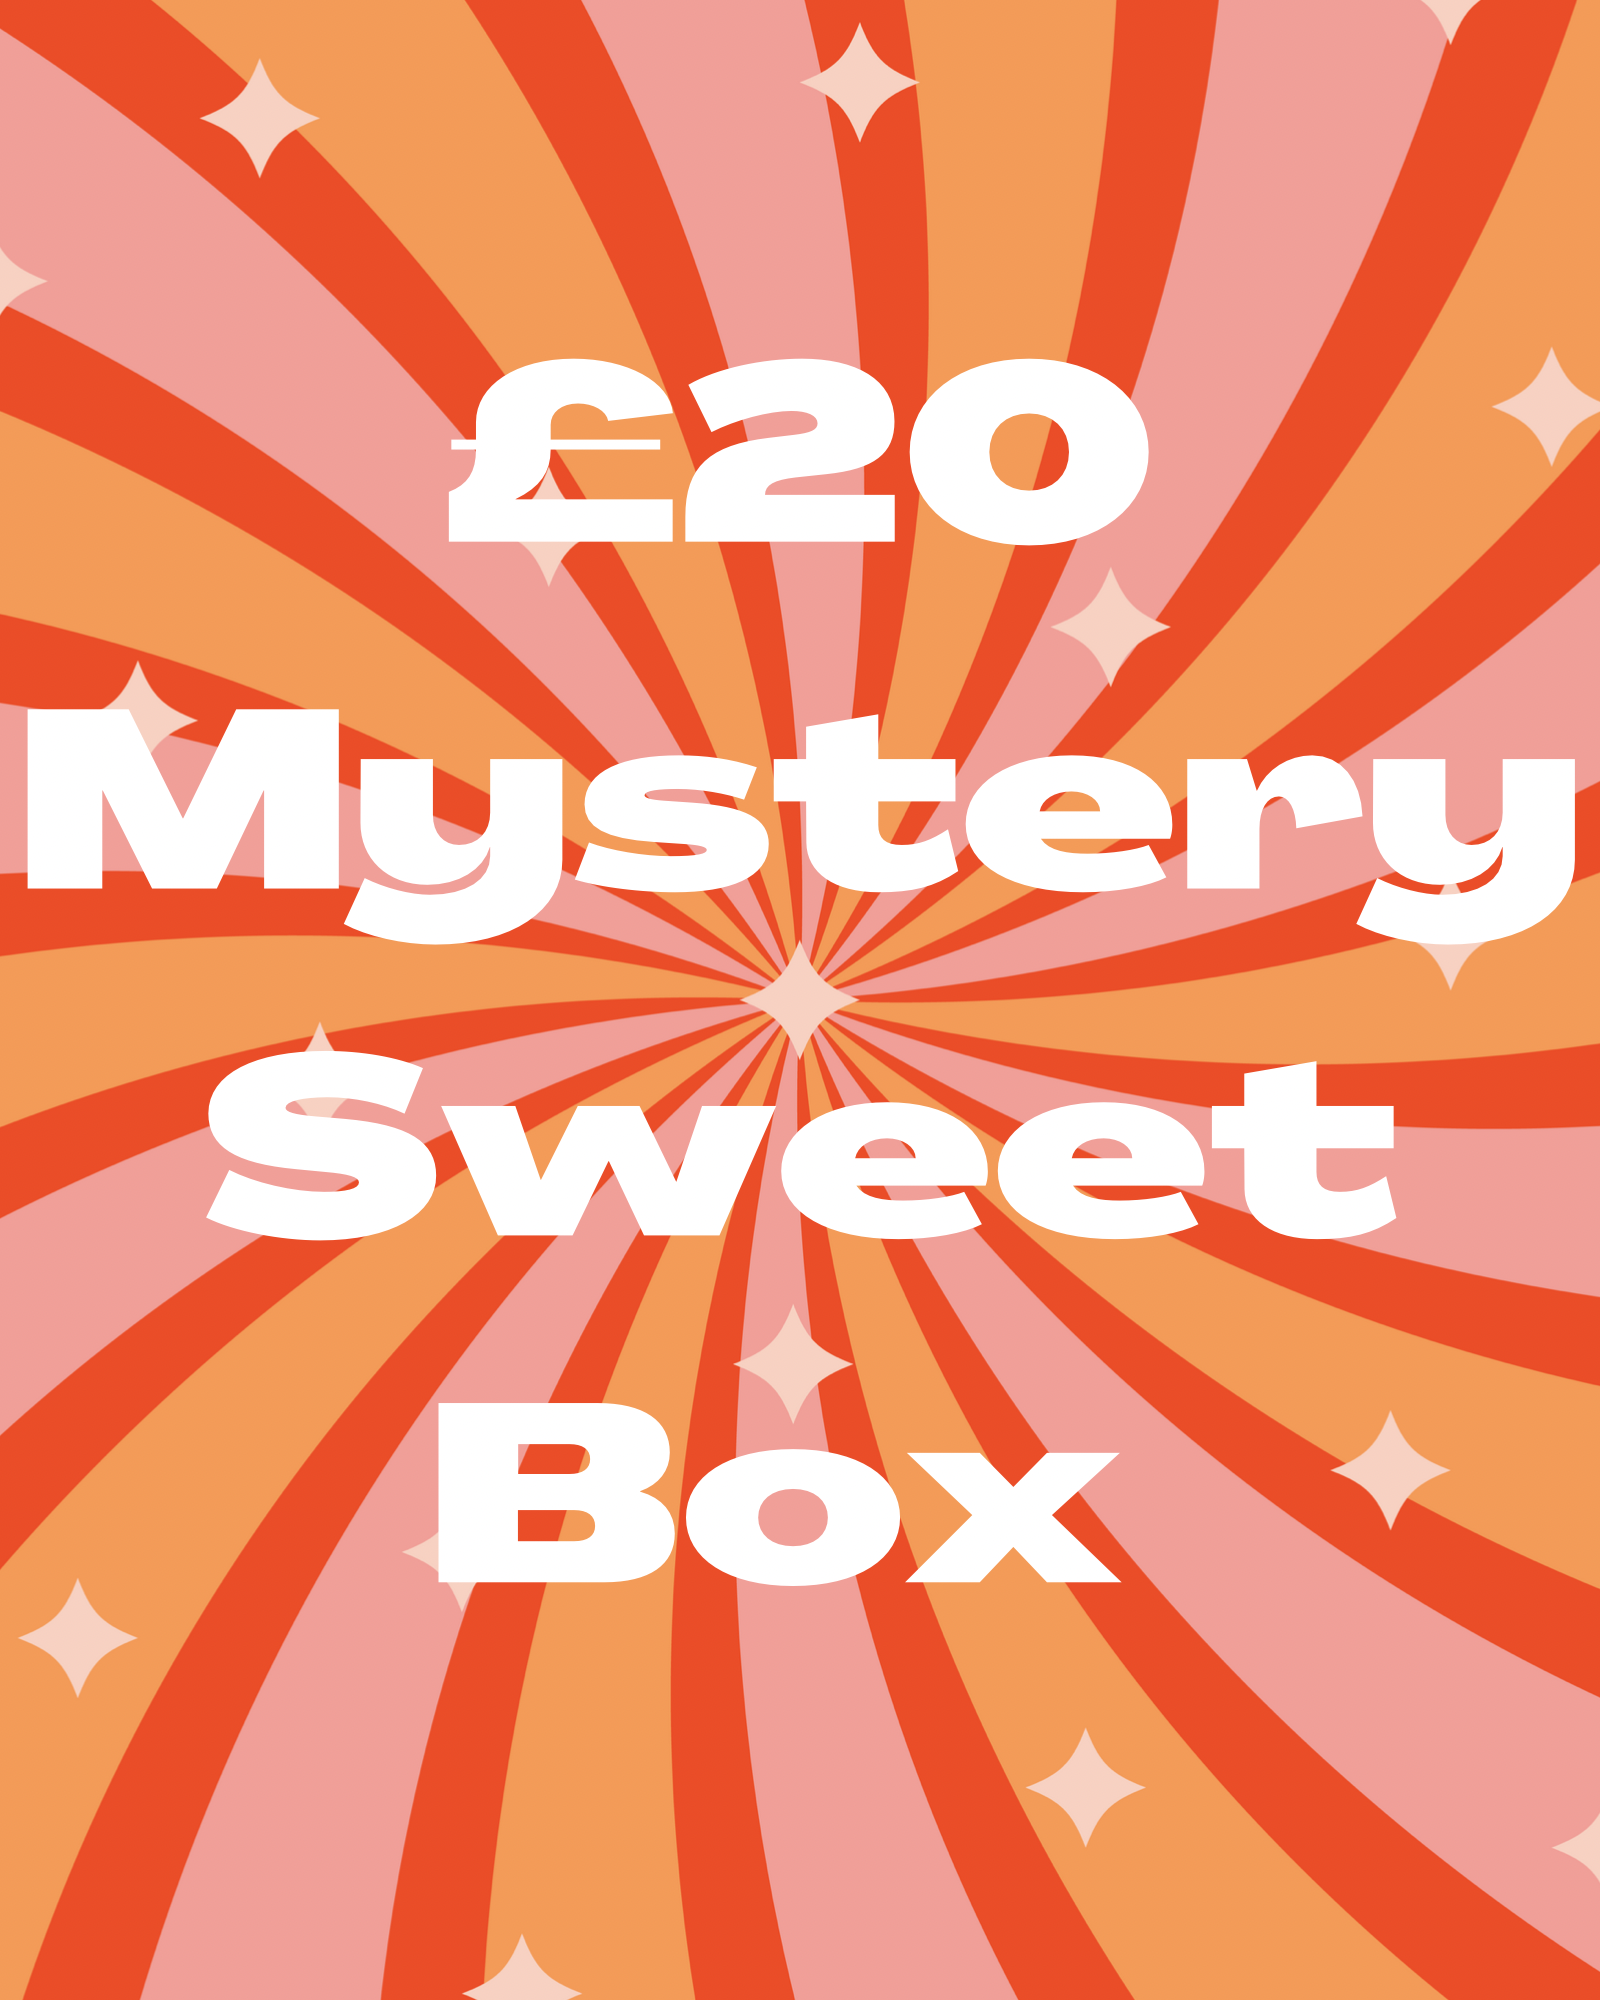 £20 Mystery Sweet Box